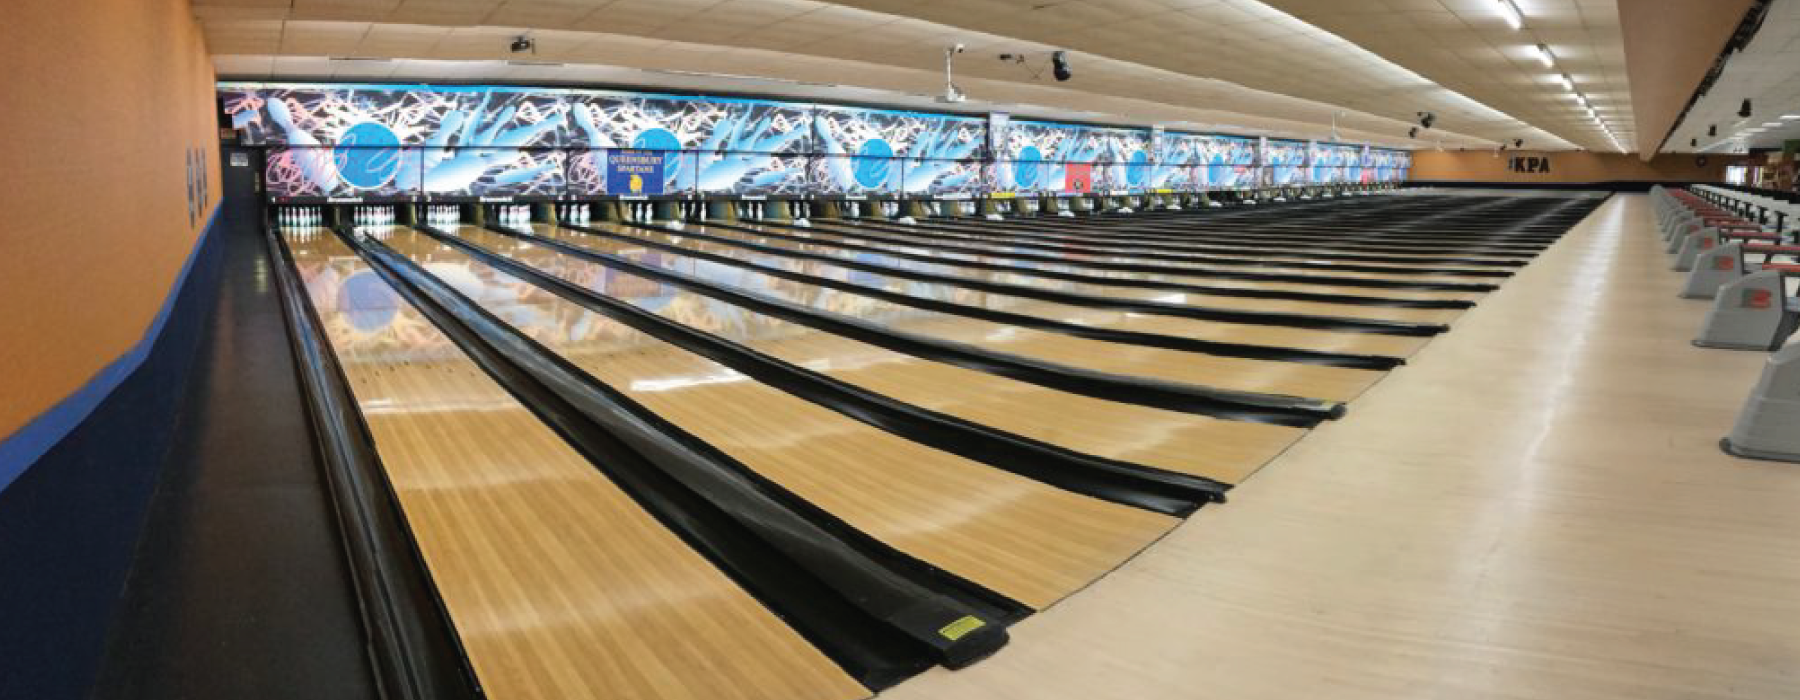 Bowling Lane PNG - 147787